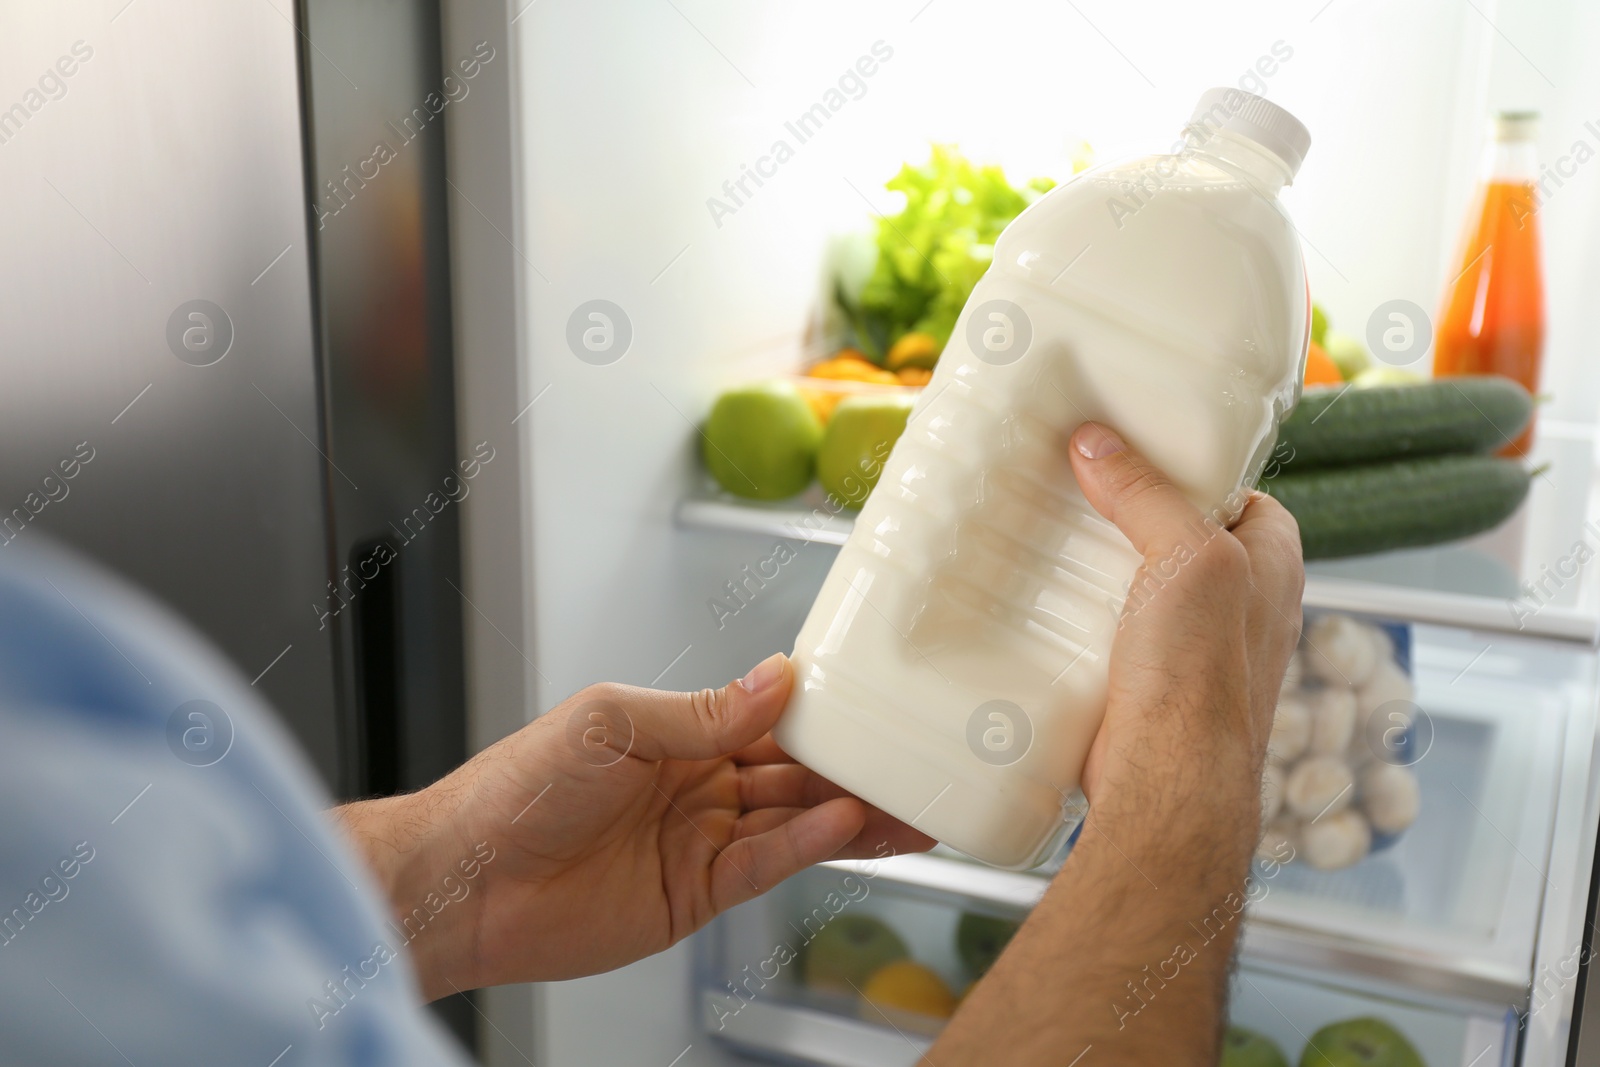 Photo of Man putting gallon of milk into refrigerator indoors, closeup